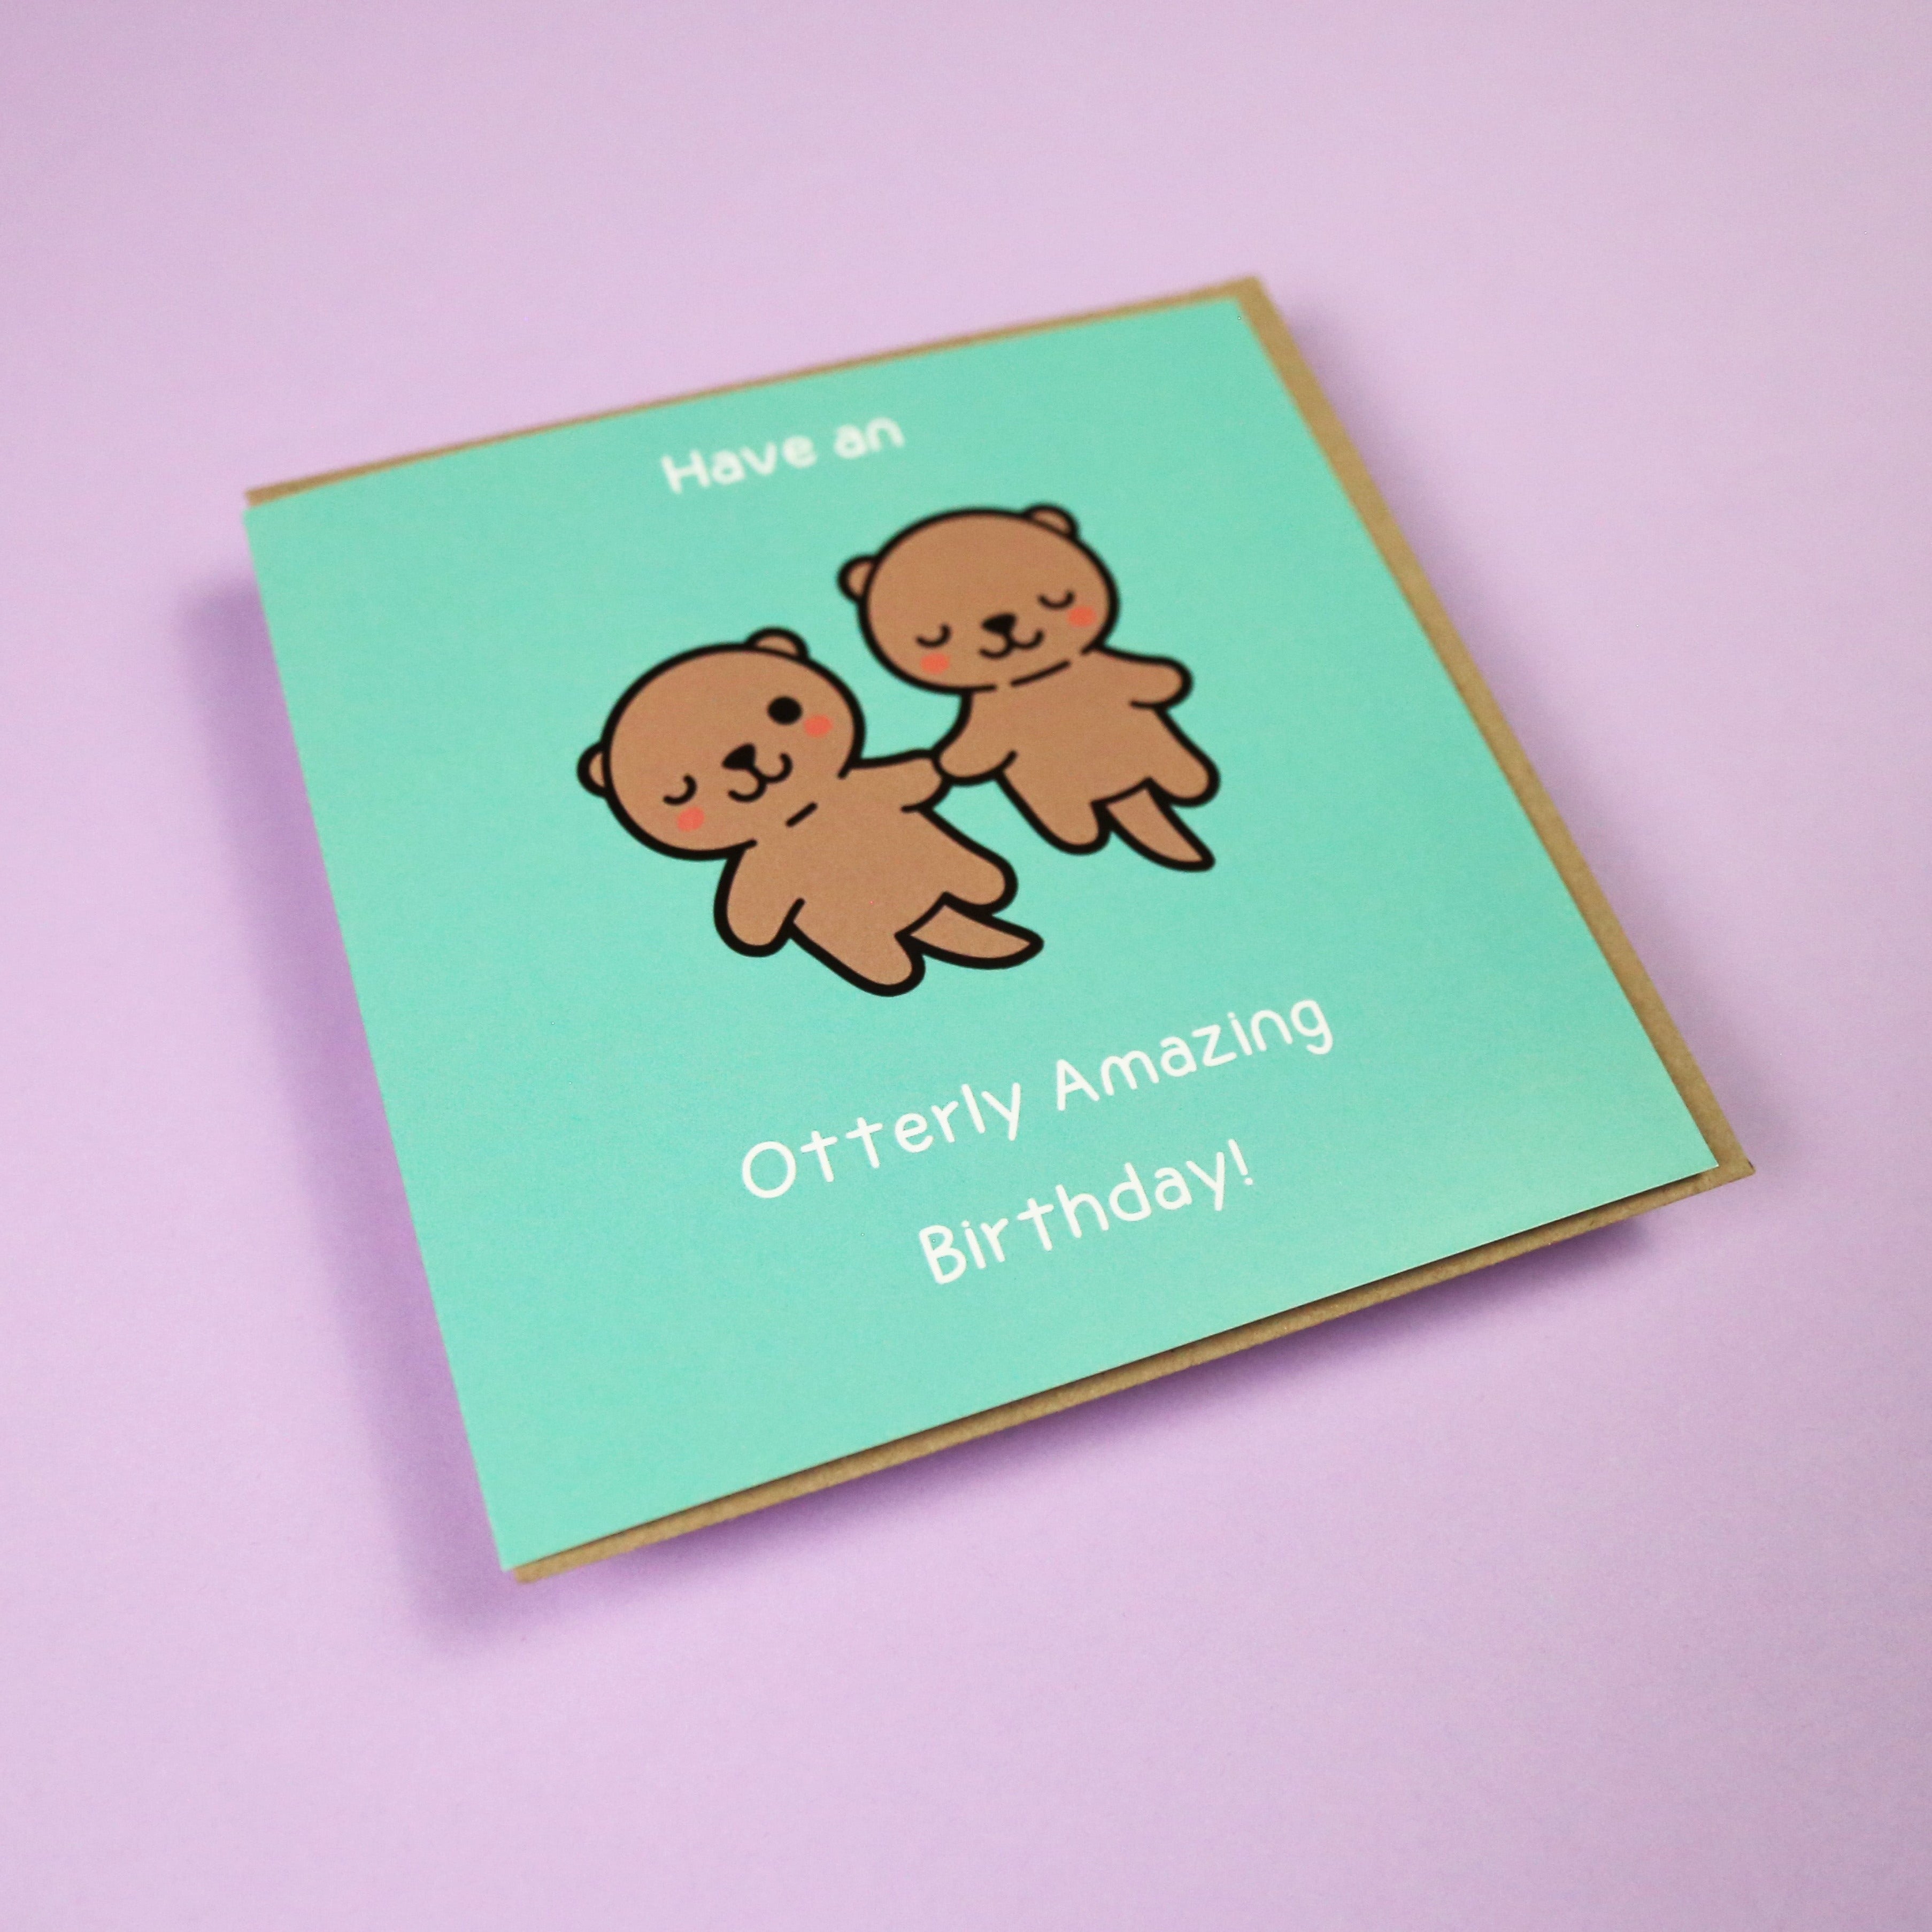 Cute Otter Birthday Card